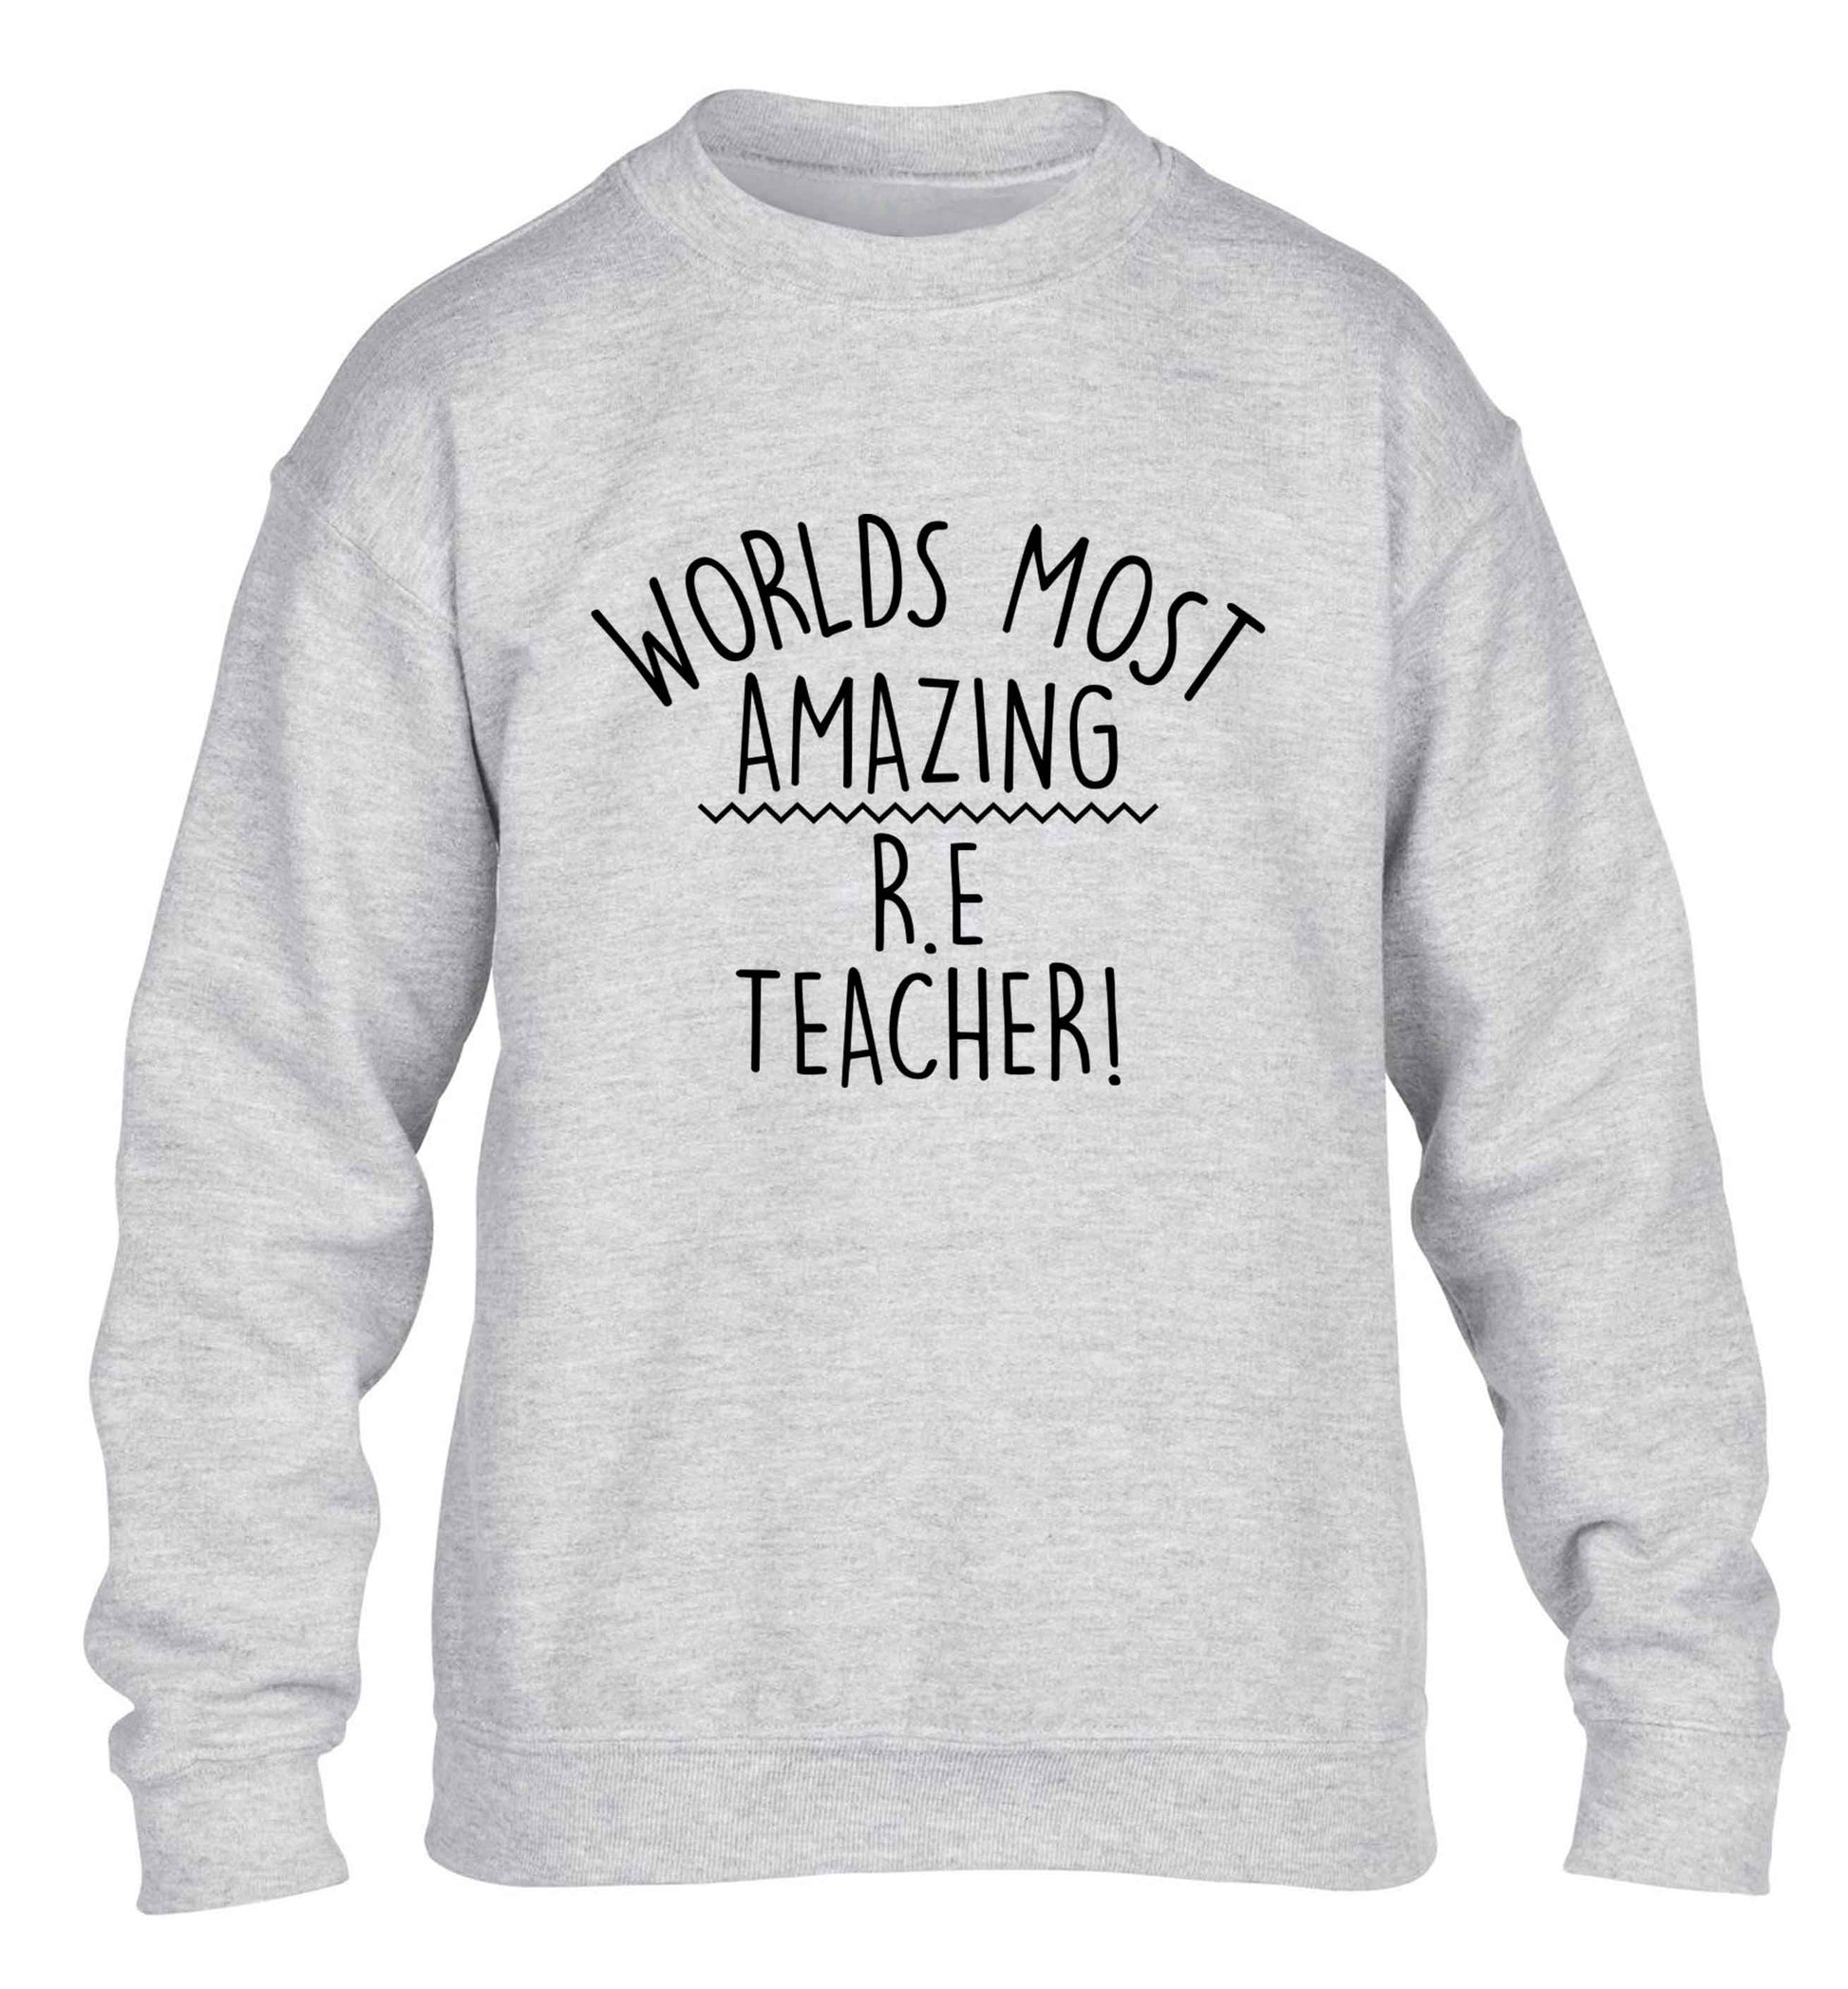 Worlds most amazing R.E teacher children's grey sweater 12-13 Years